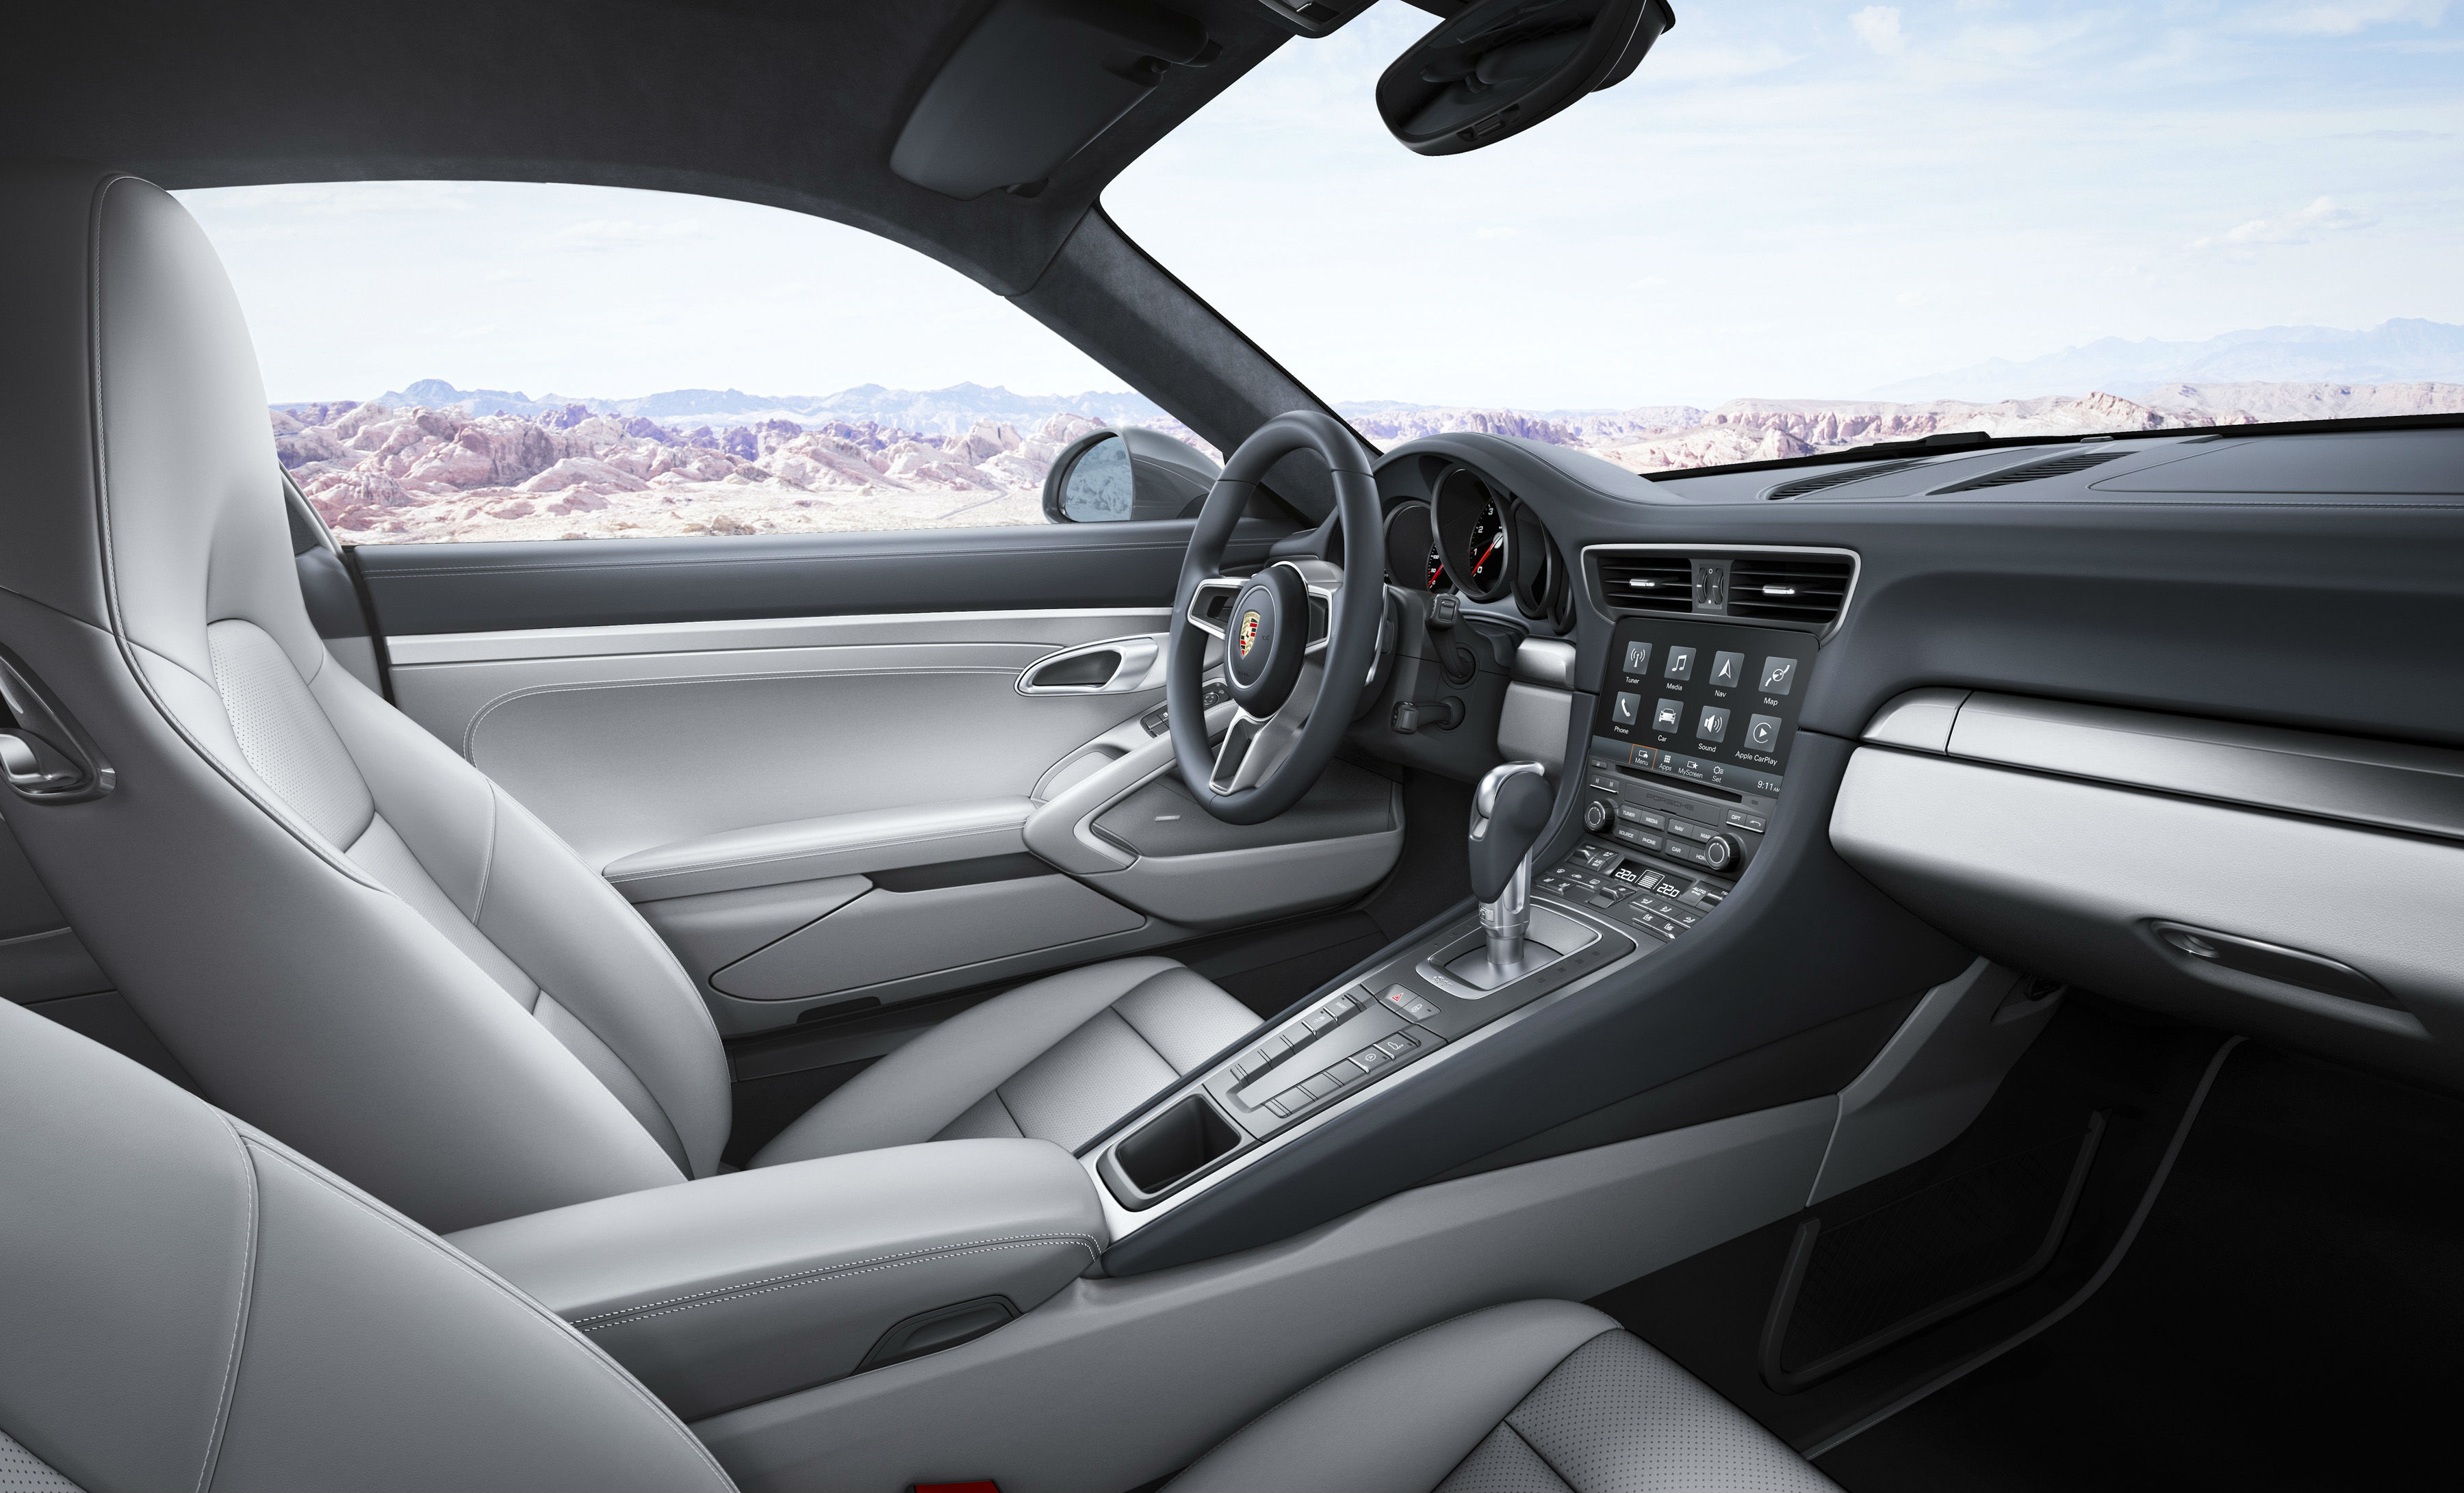 Apple CarPlay features on the new 2016 Porsche 911 Carrera range